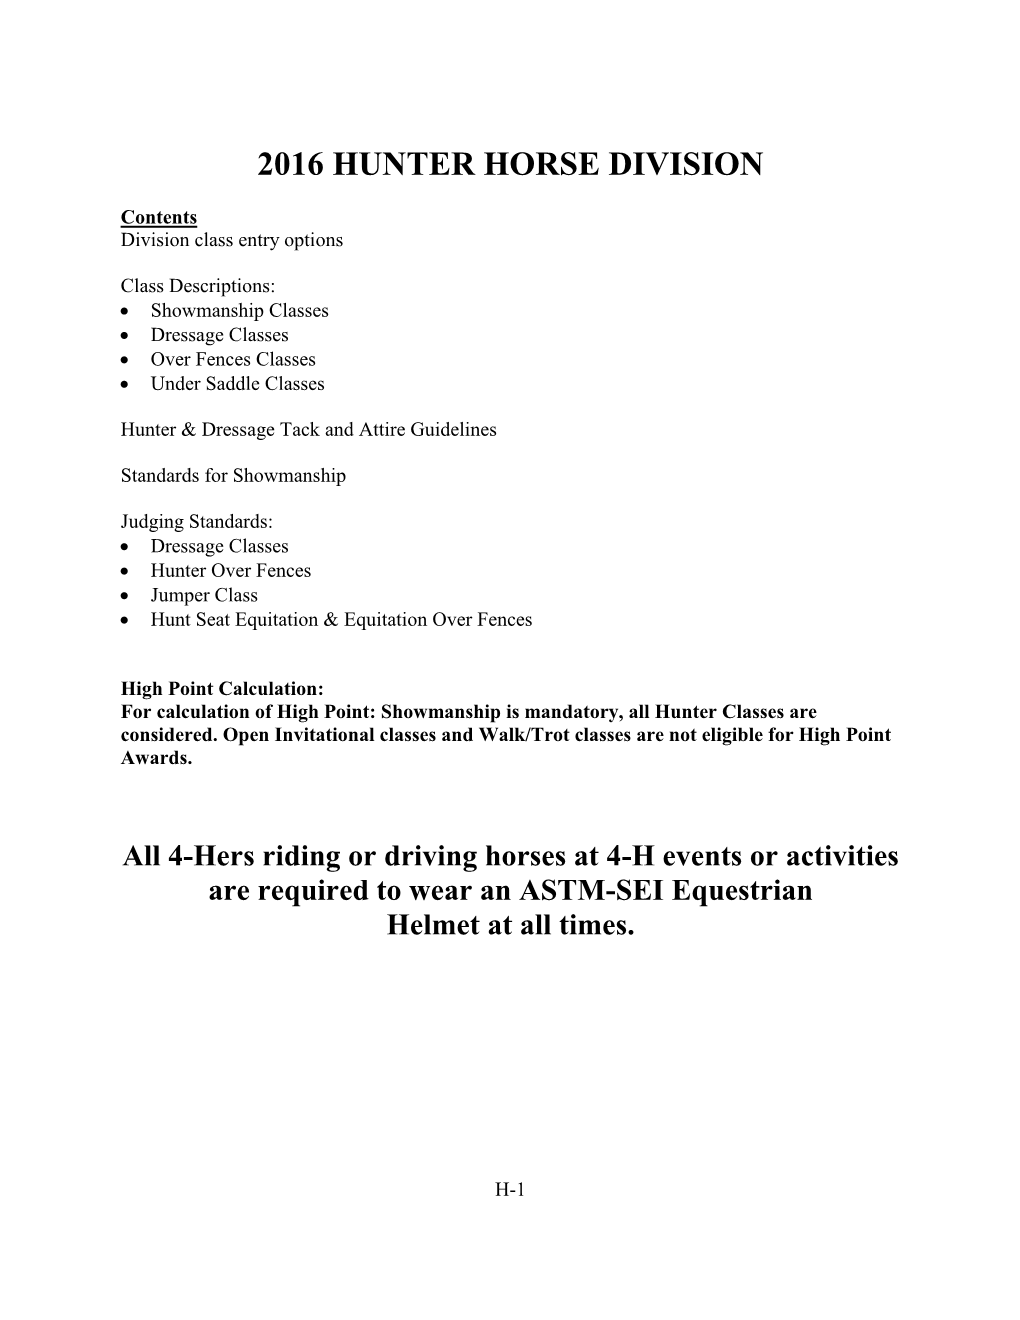 2010 Hunter Horse Division